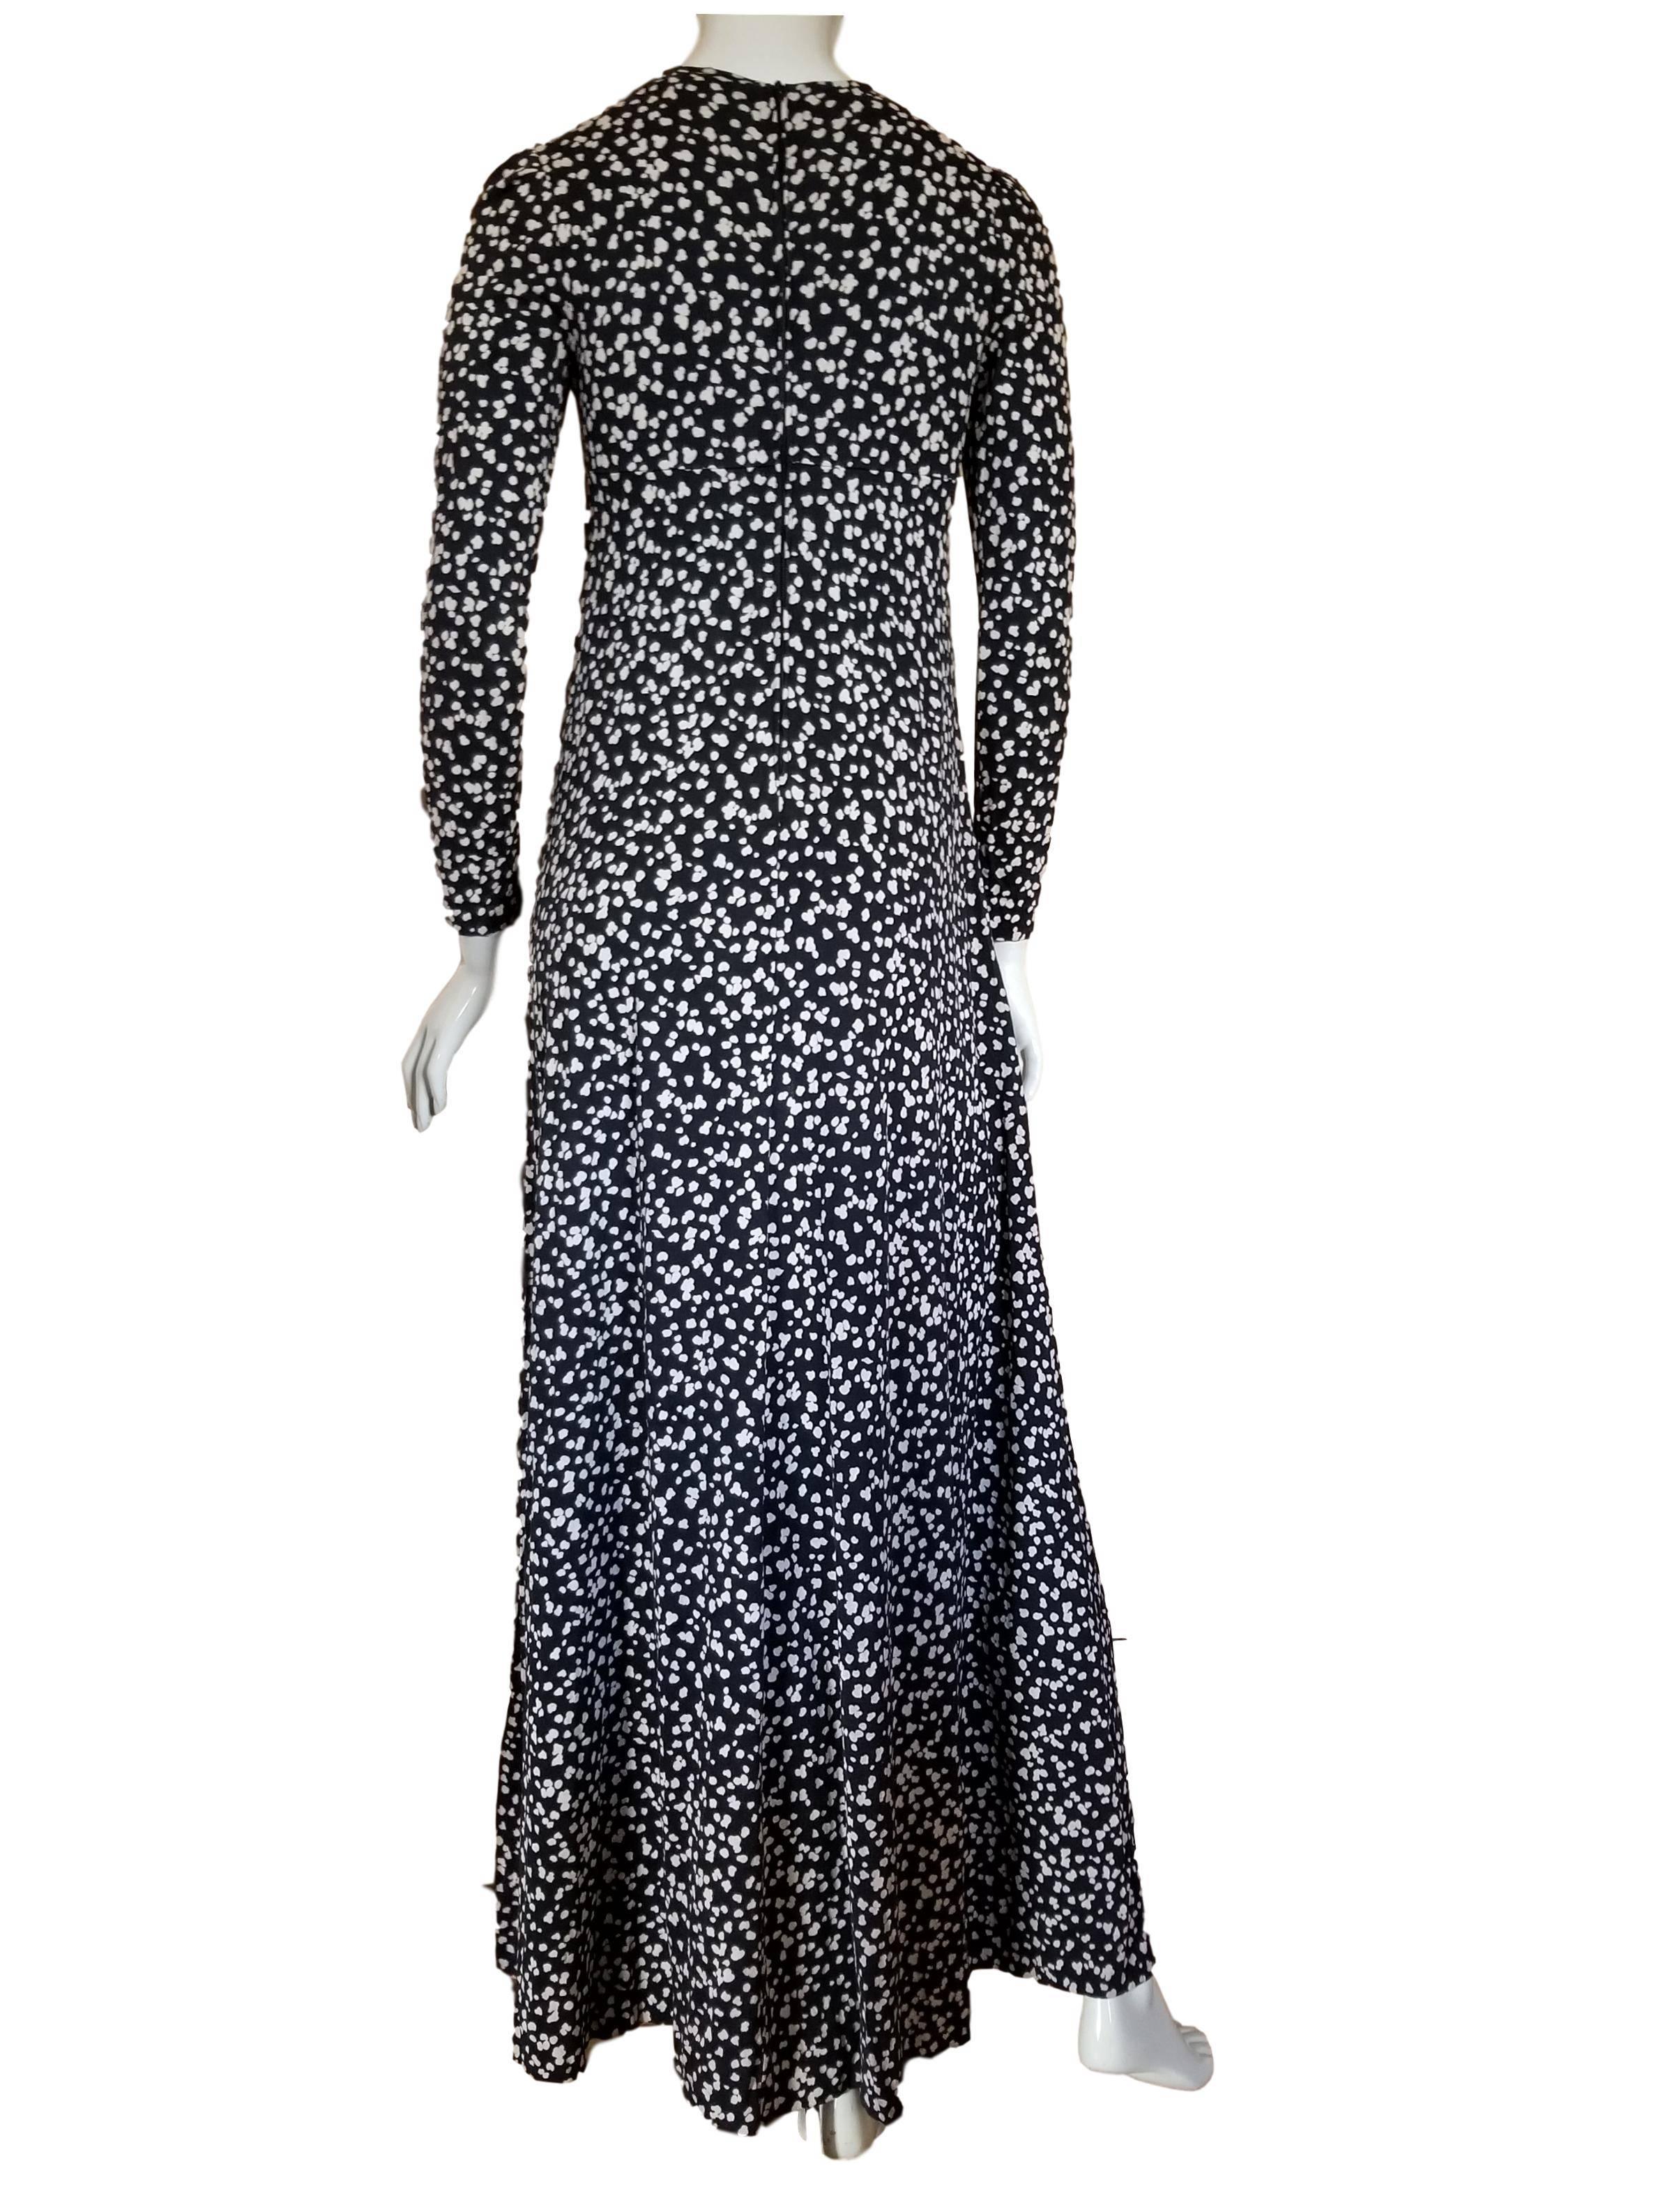 Diane Von Furstenberg 1970s Navy Blue White Cotton Rayon Maxi Dress In Excellent Condition For Sale In Portsmouth, Hampshire